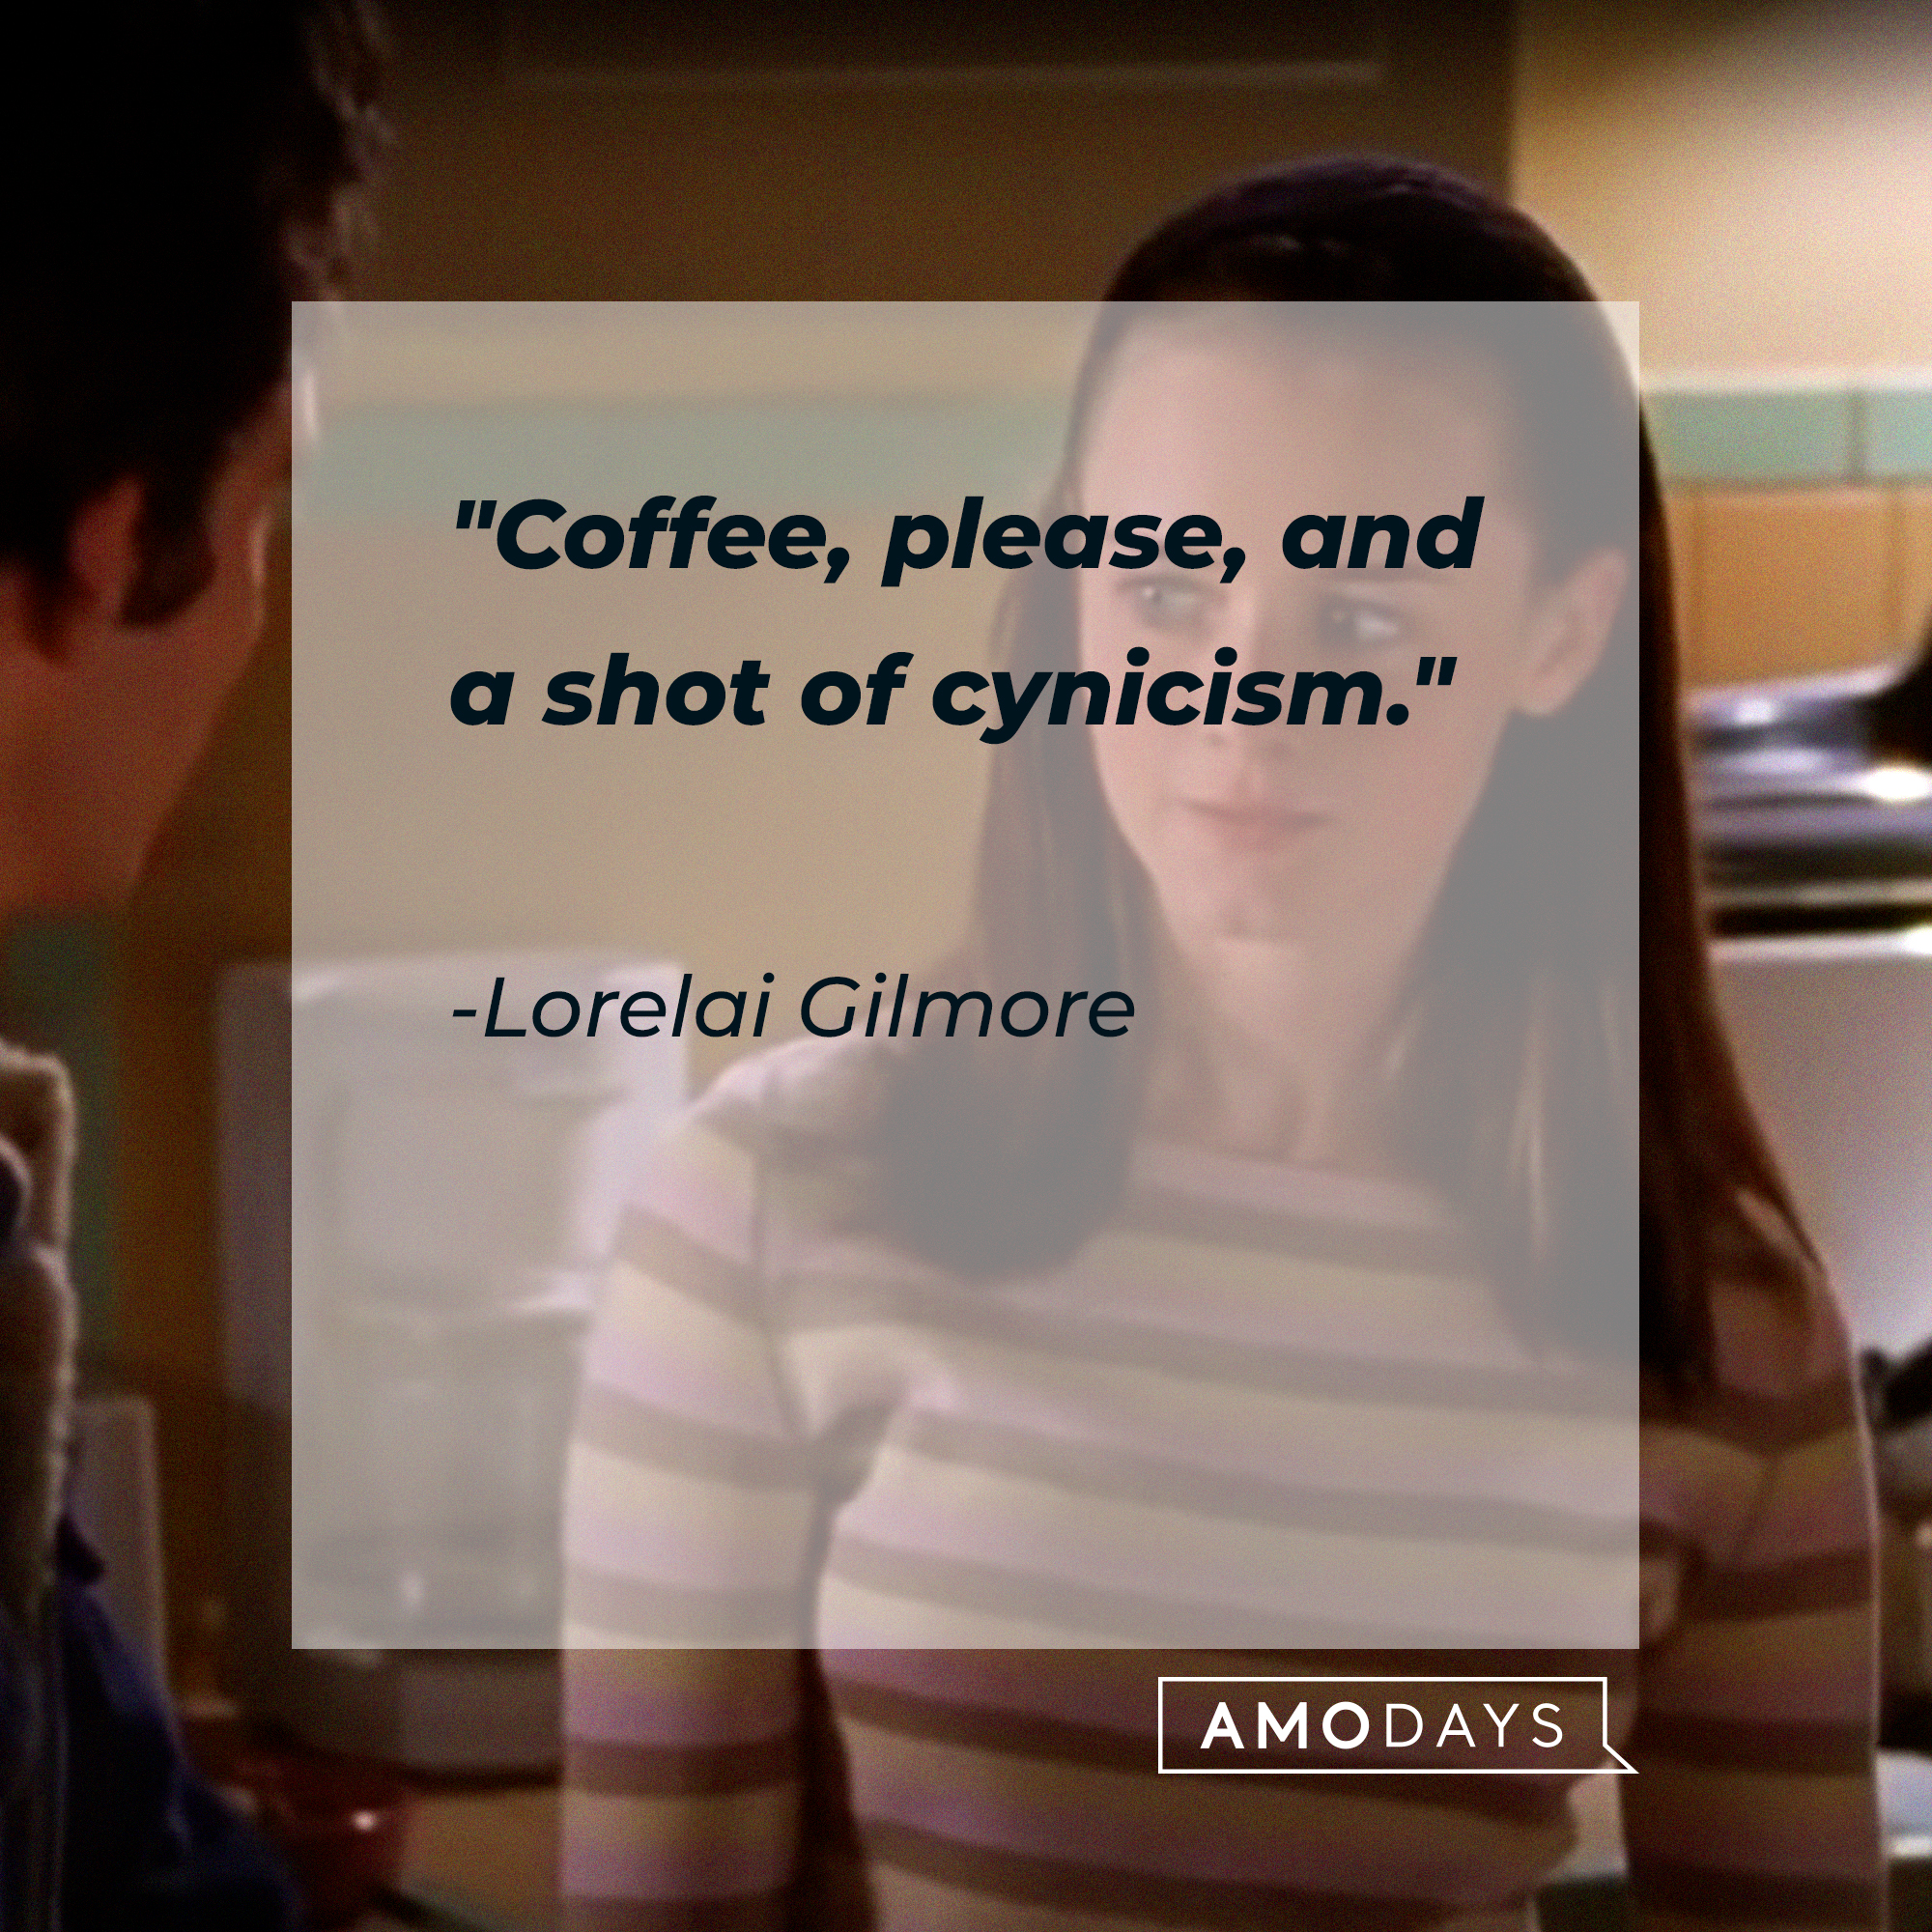 Lorelai Gilmore's quote: "Coffee, please, and a shot of cynicism." | Source: facebook.com/GilmoreGirls